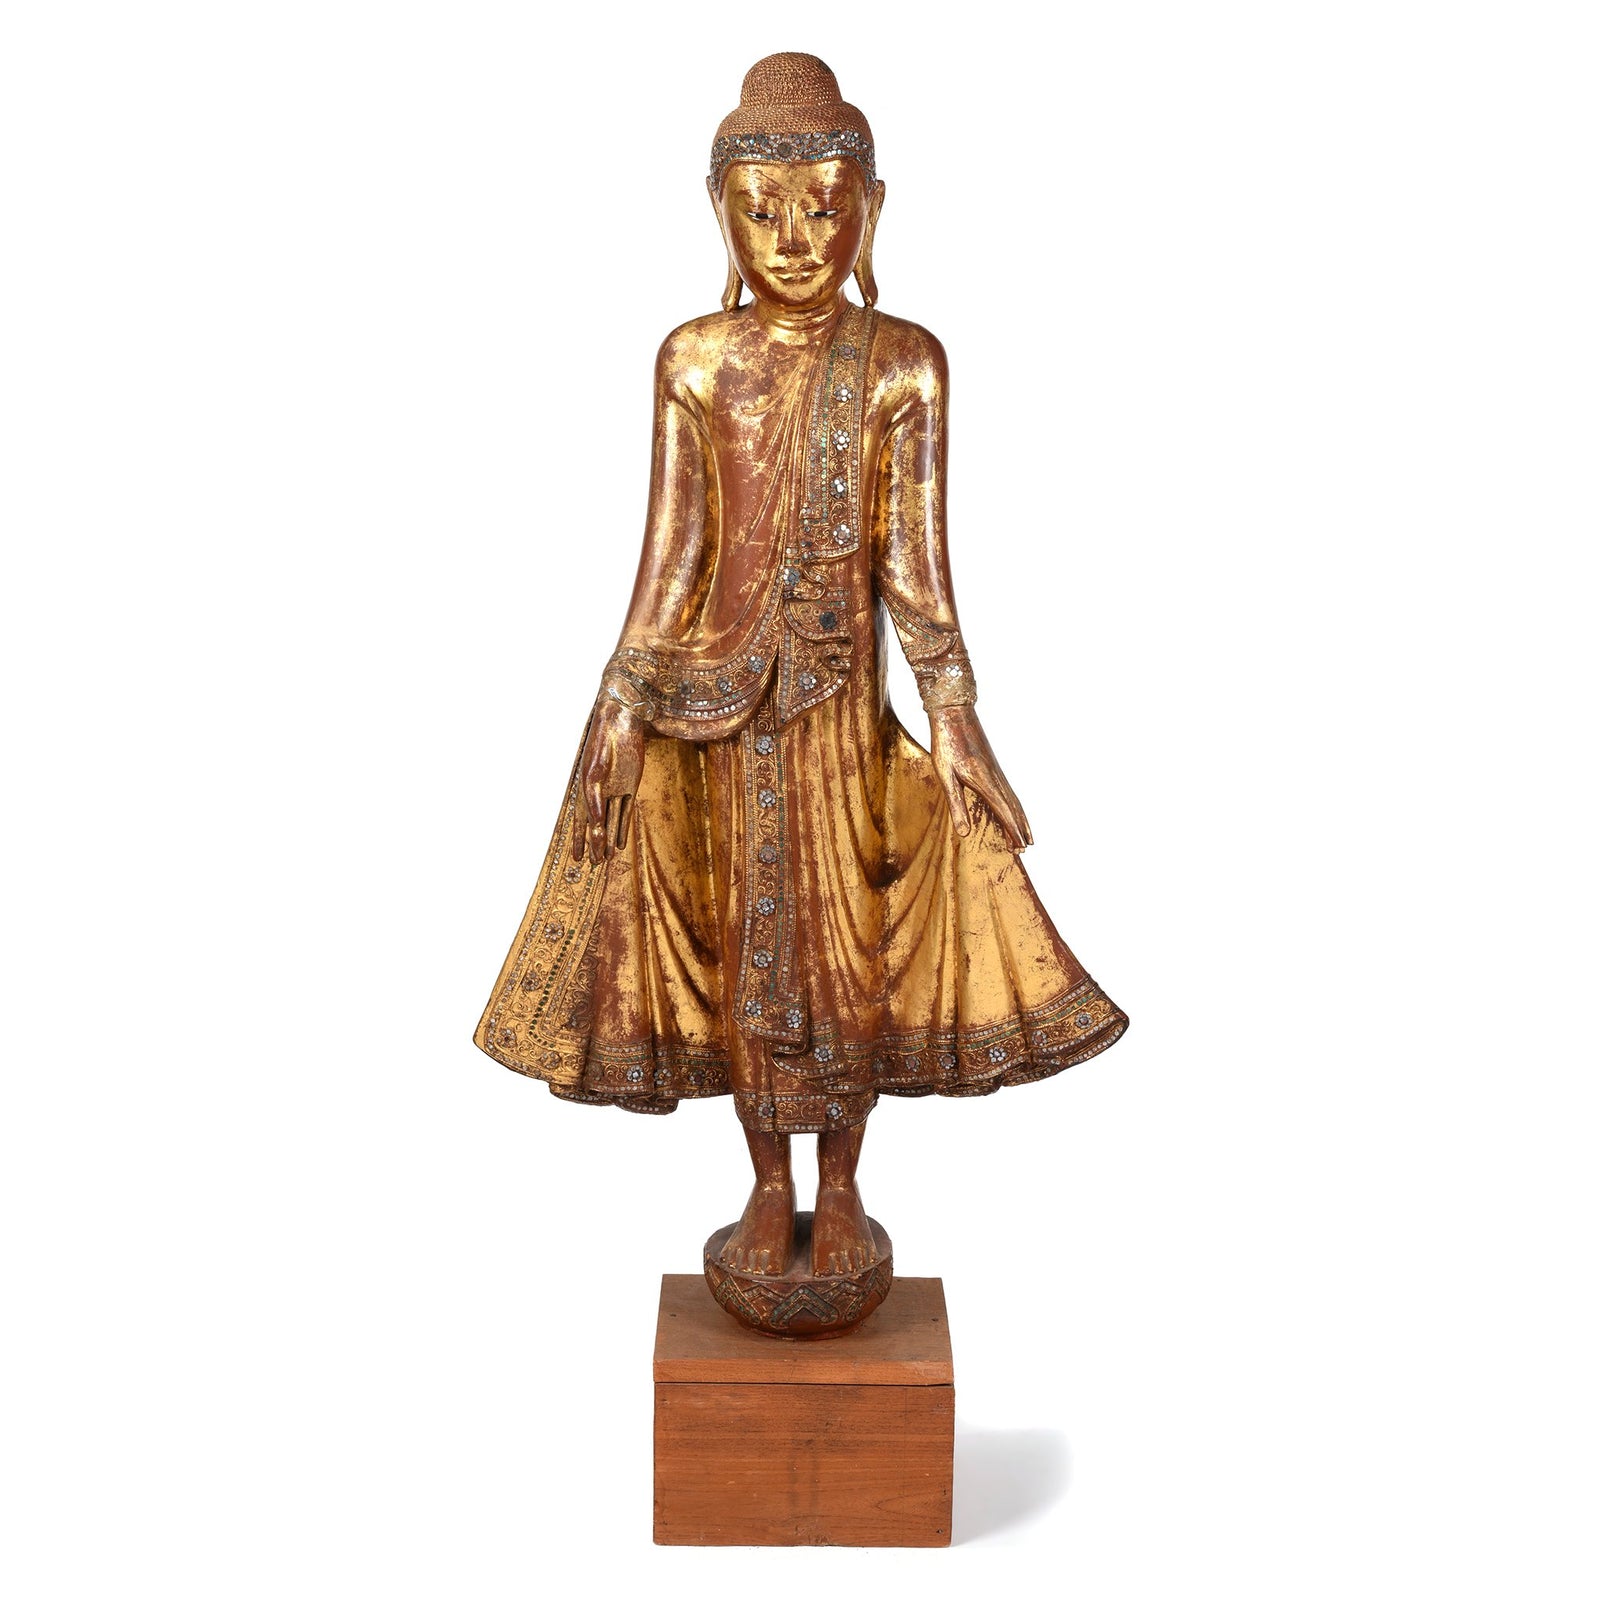 Gilded Teak Burmese Standing Buddha  from Mandalay - Early 20thC - 56 x 18 x 124 cm (WxDxH cms) - M400